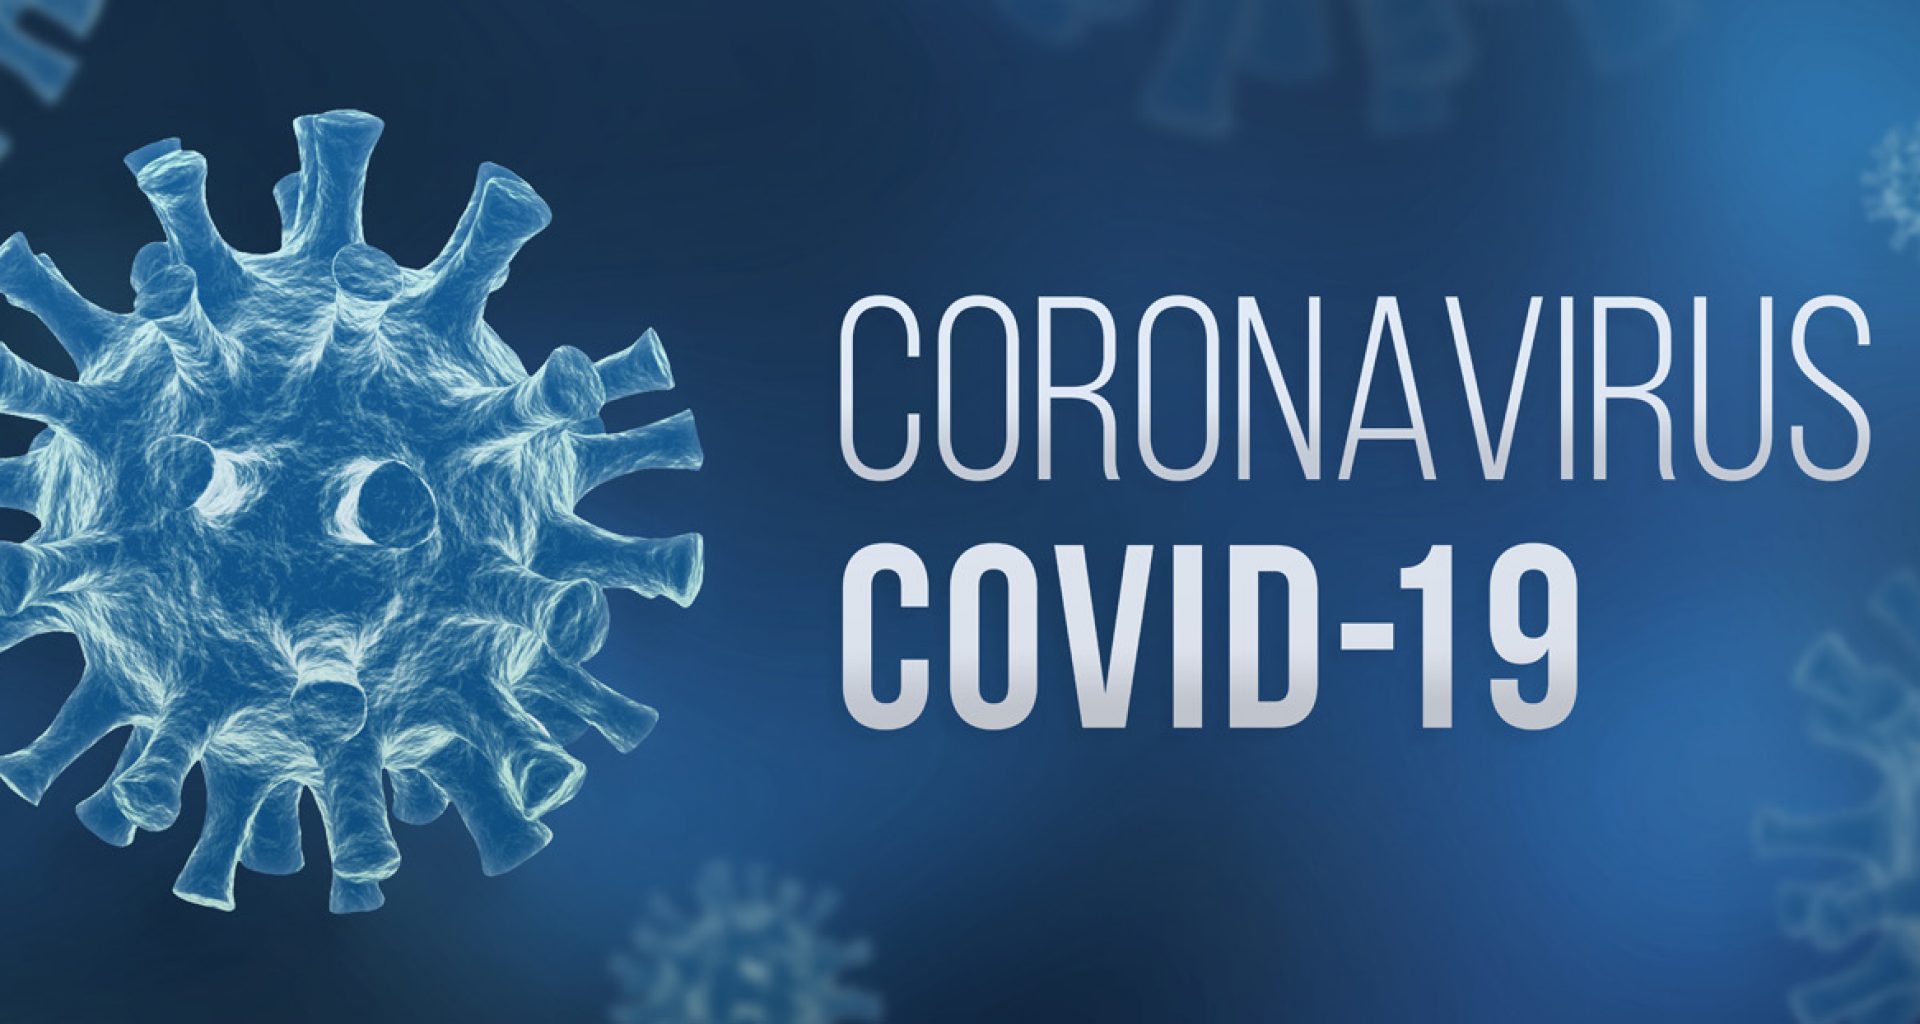 Coronavirus COVID-19